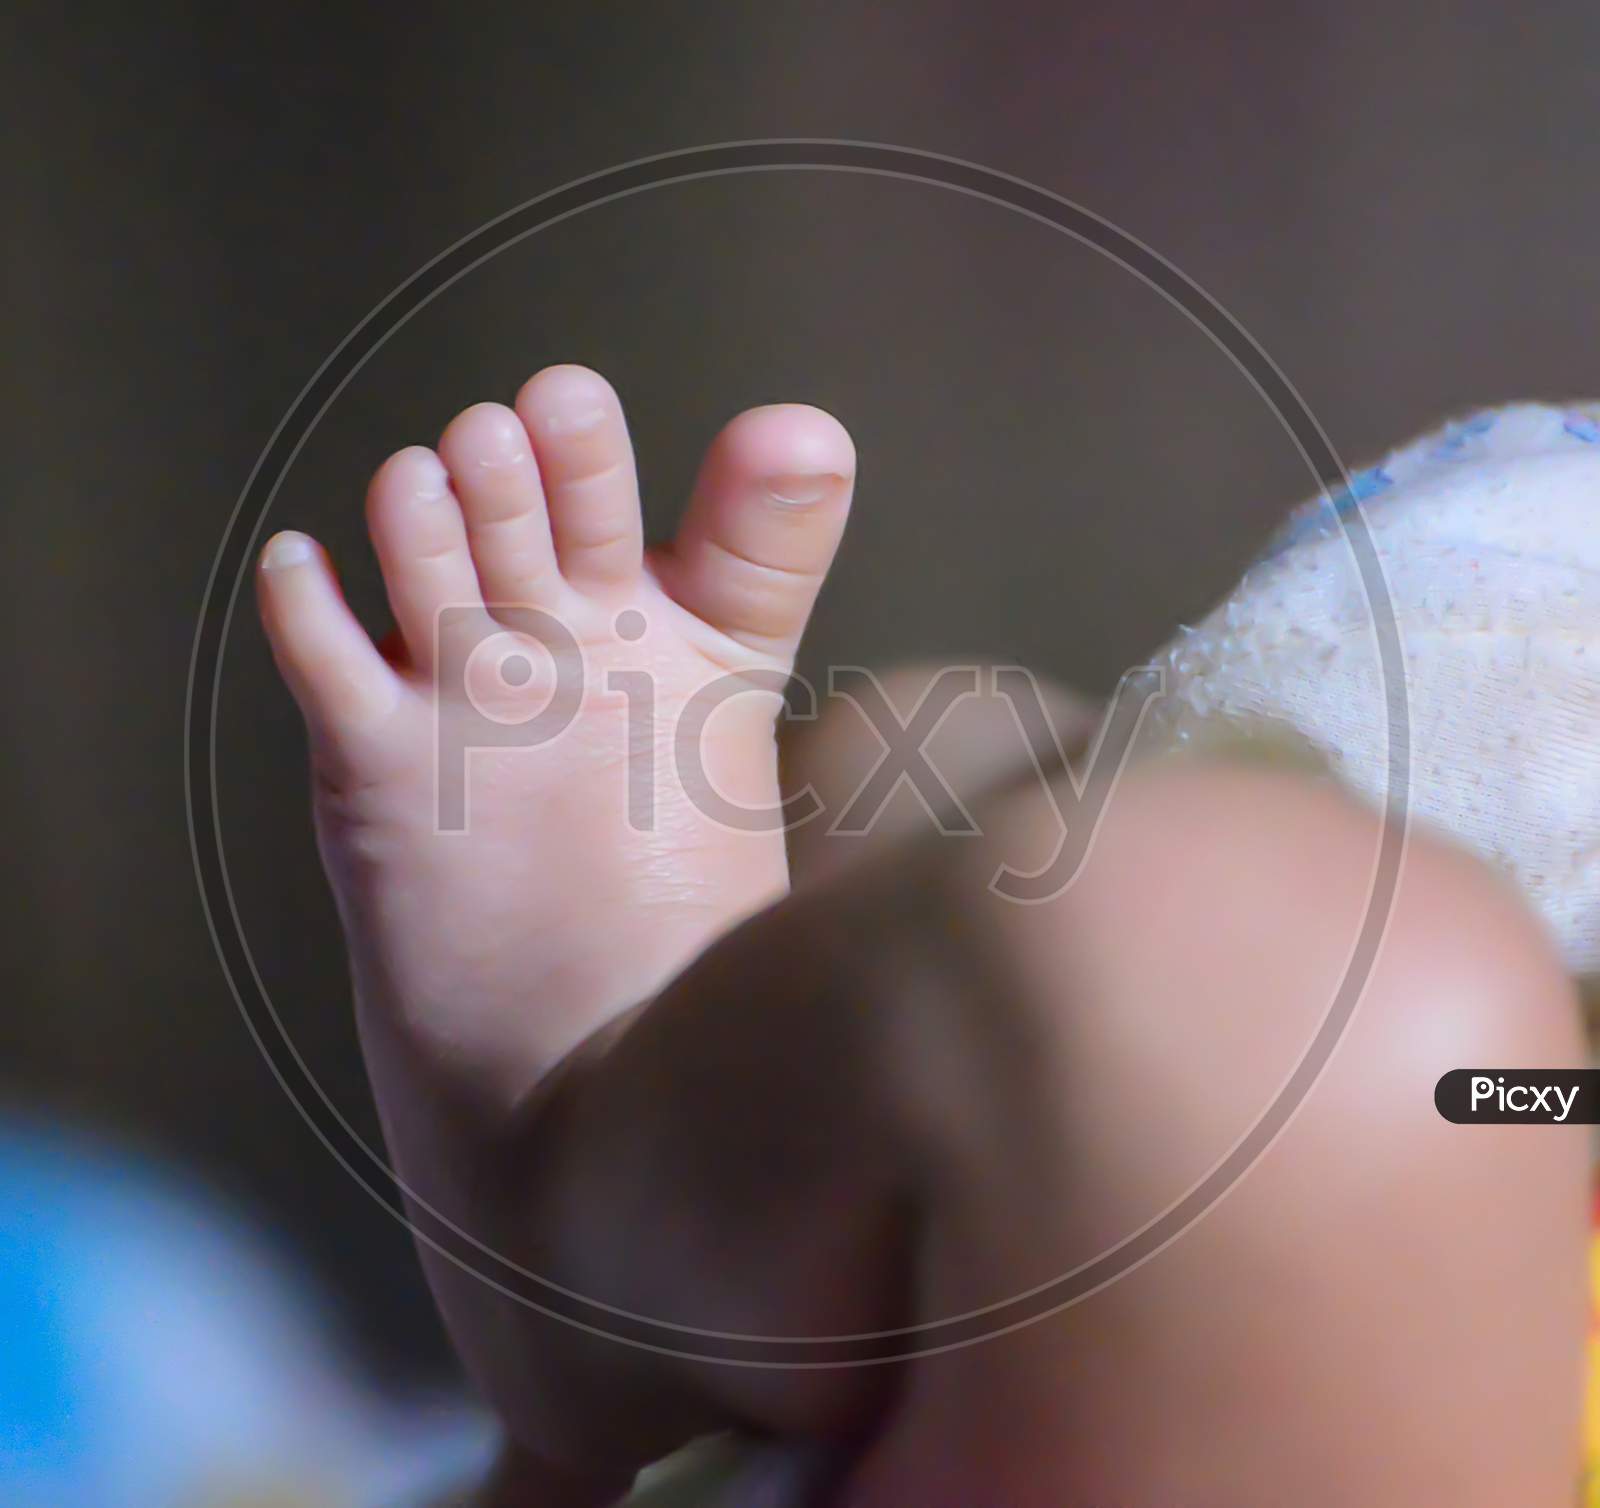 Photograph of Newborn baby Tiny feet